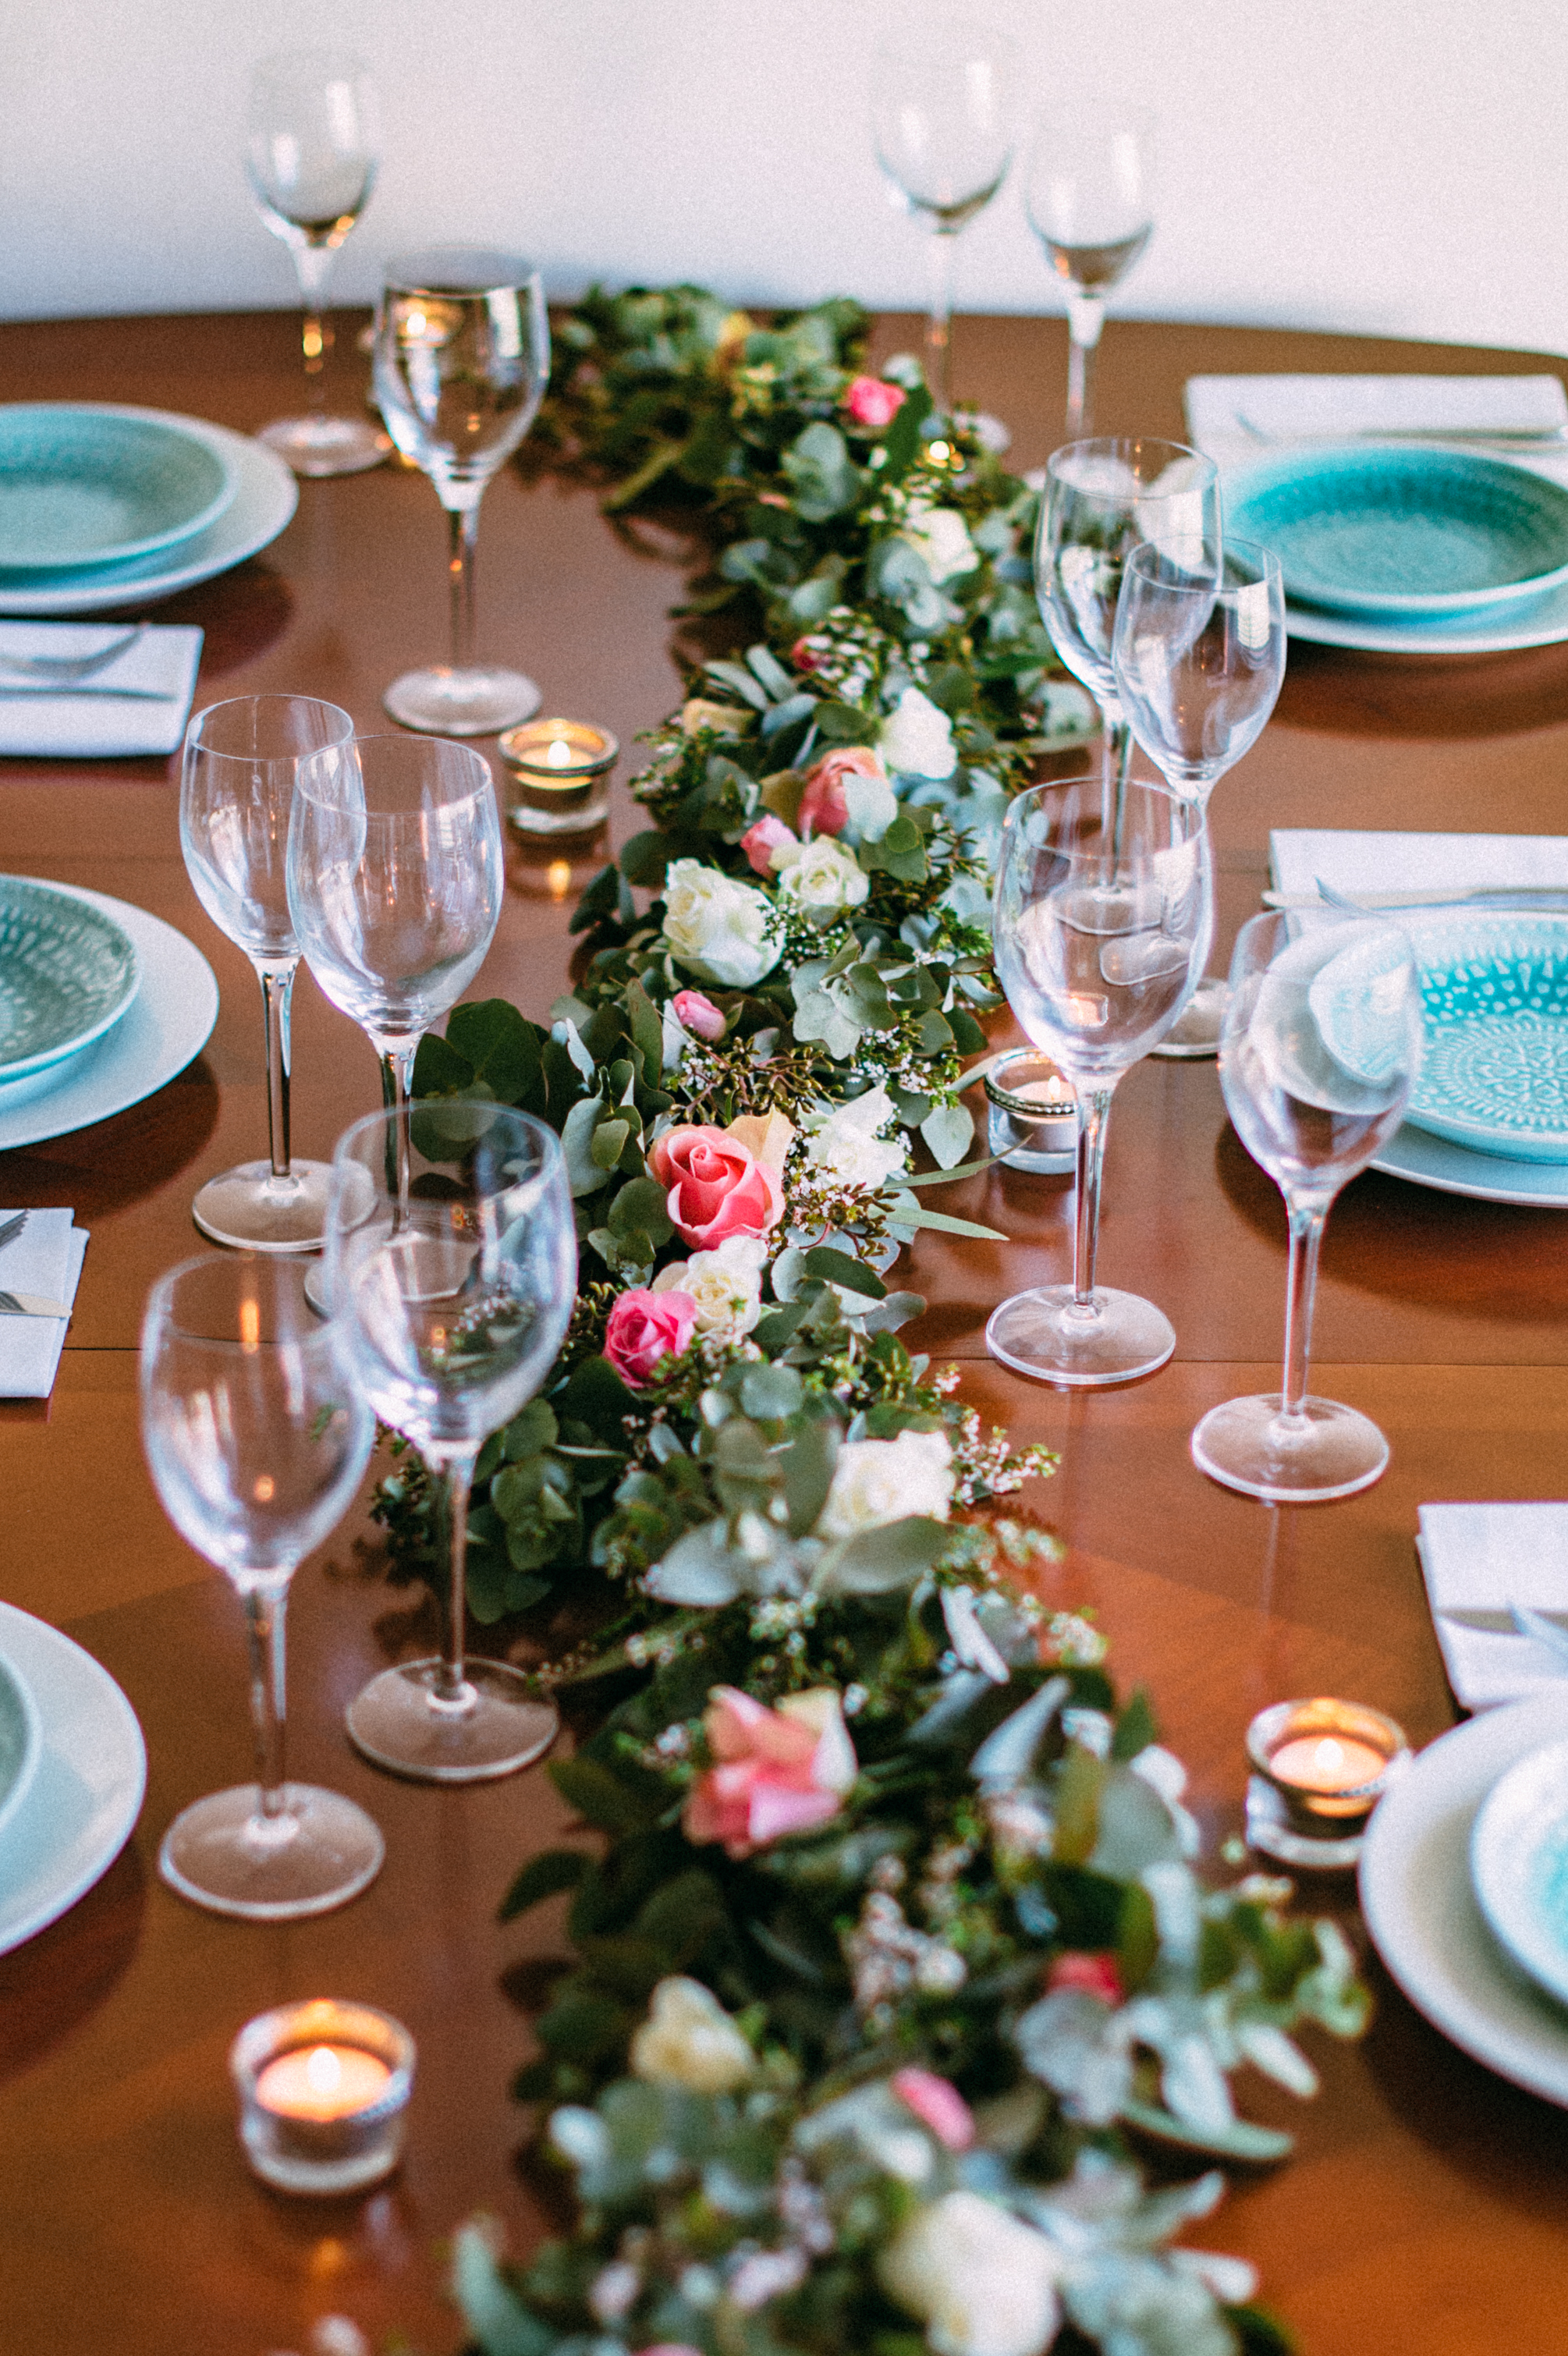 Graceful Blooms Mortdale florist table arrangement weddings special events